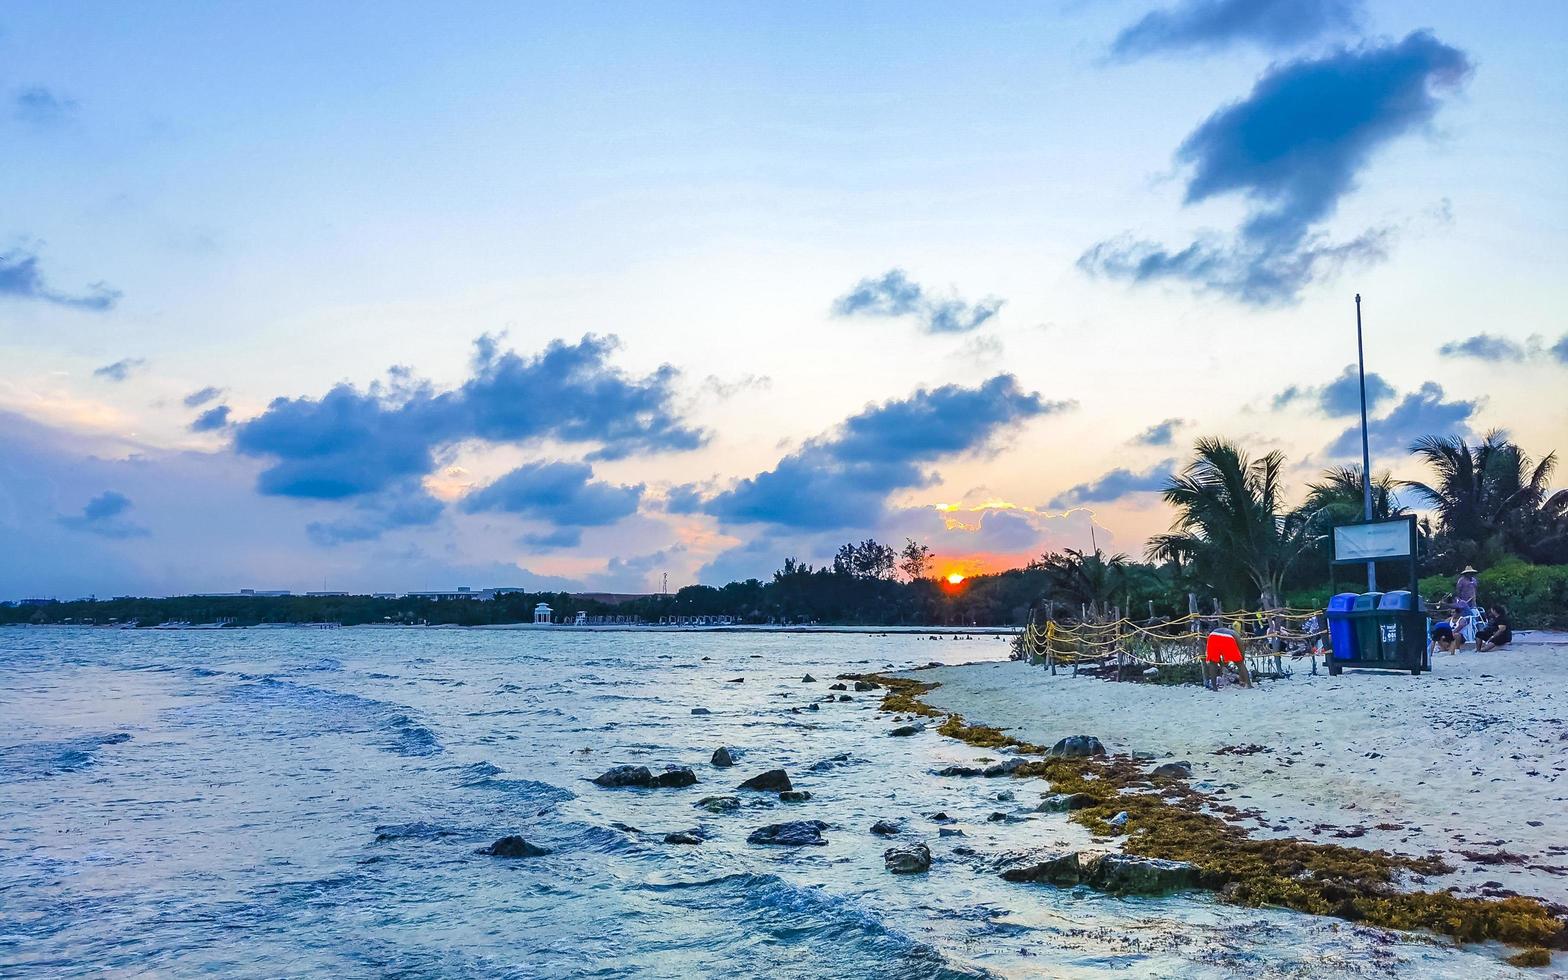 Playa del Carmen Quintana Roo Mexico 2021 Beautiful sunset evening at beach coast with sea weed Mexico. photo